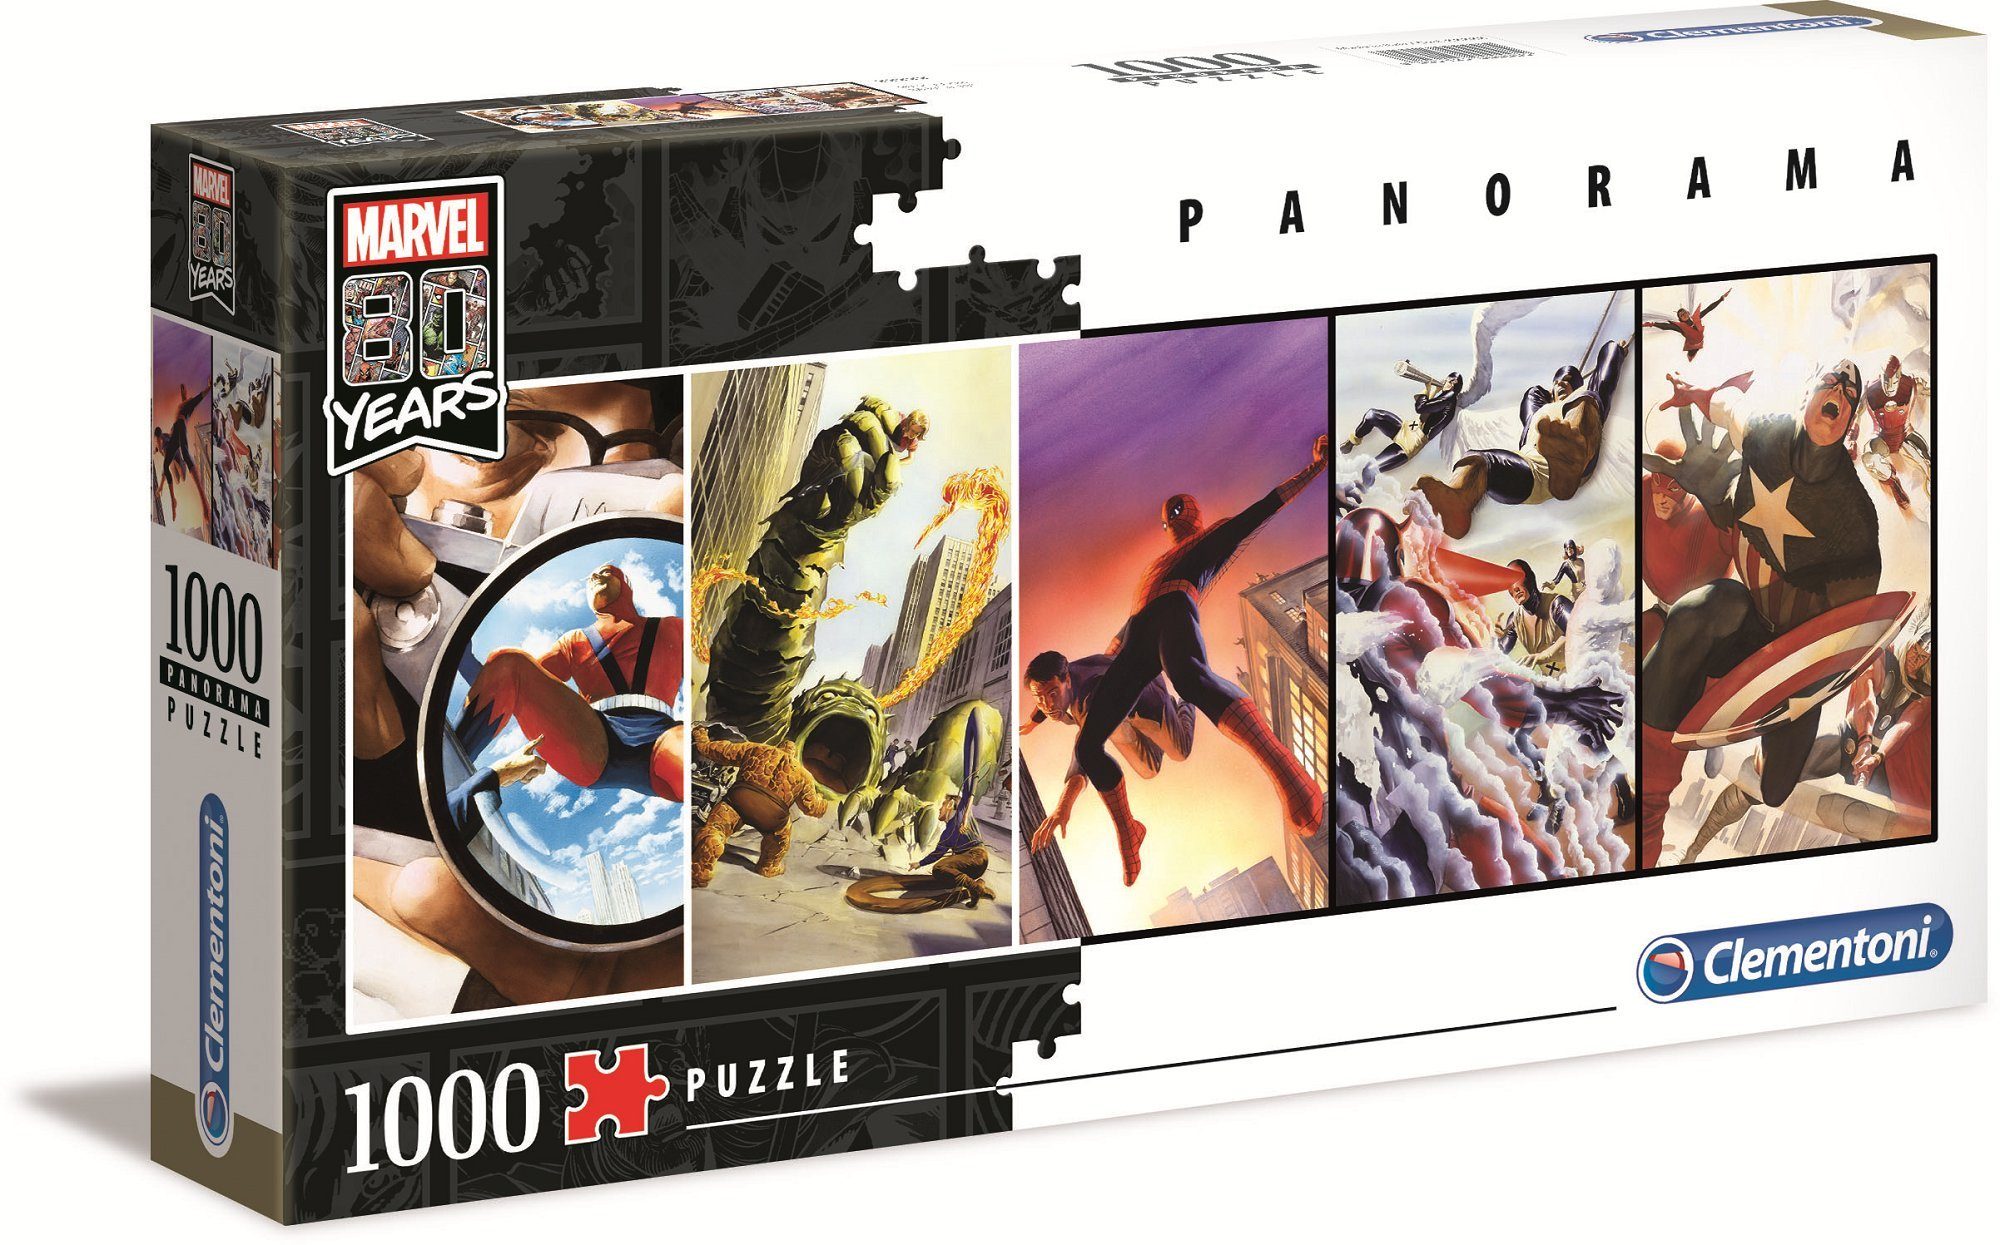 Puzzle 39546 Marvel 80 Jahre 1000 Teile Panorama Puzzle, 1000 Puzzleteile, 80 Jahre Edition